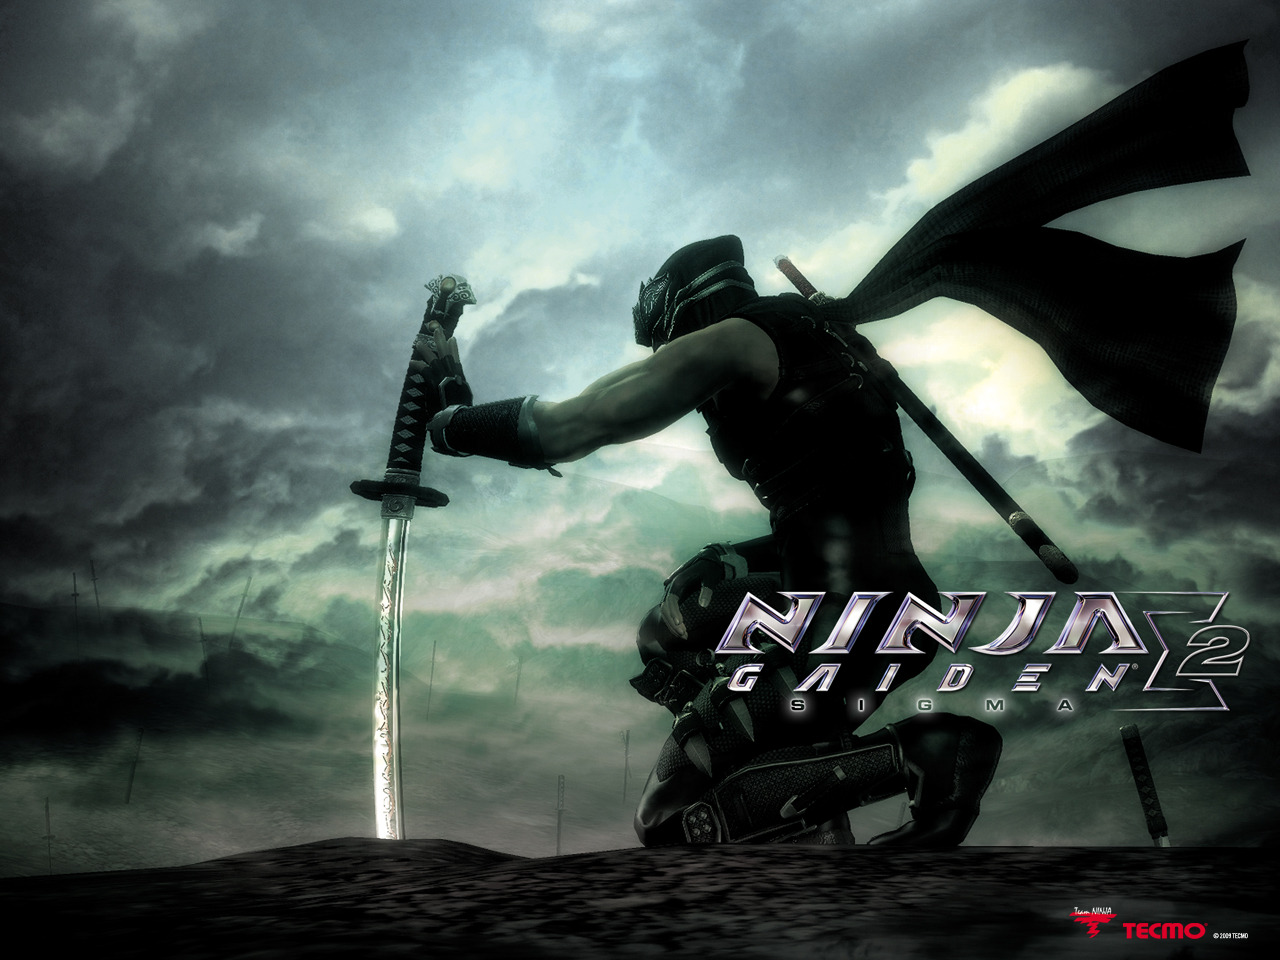 fond d'ecran ninja